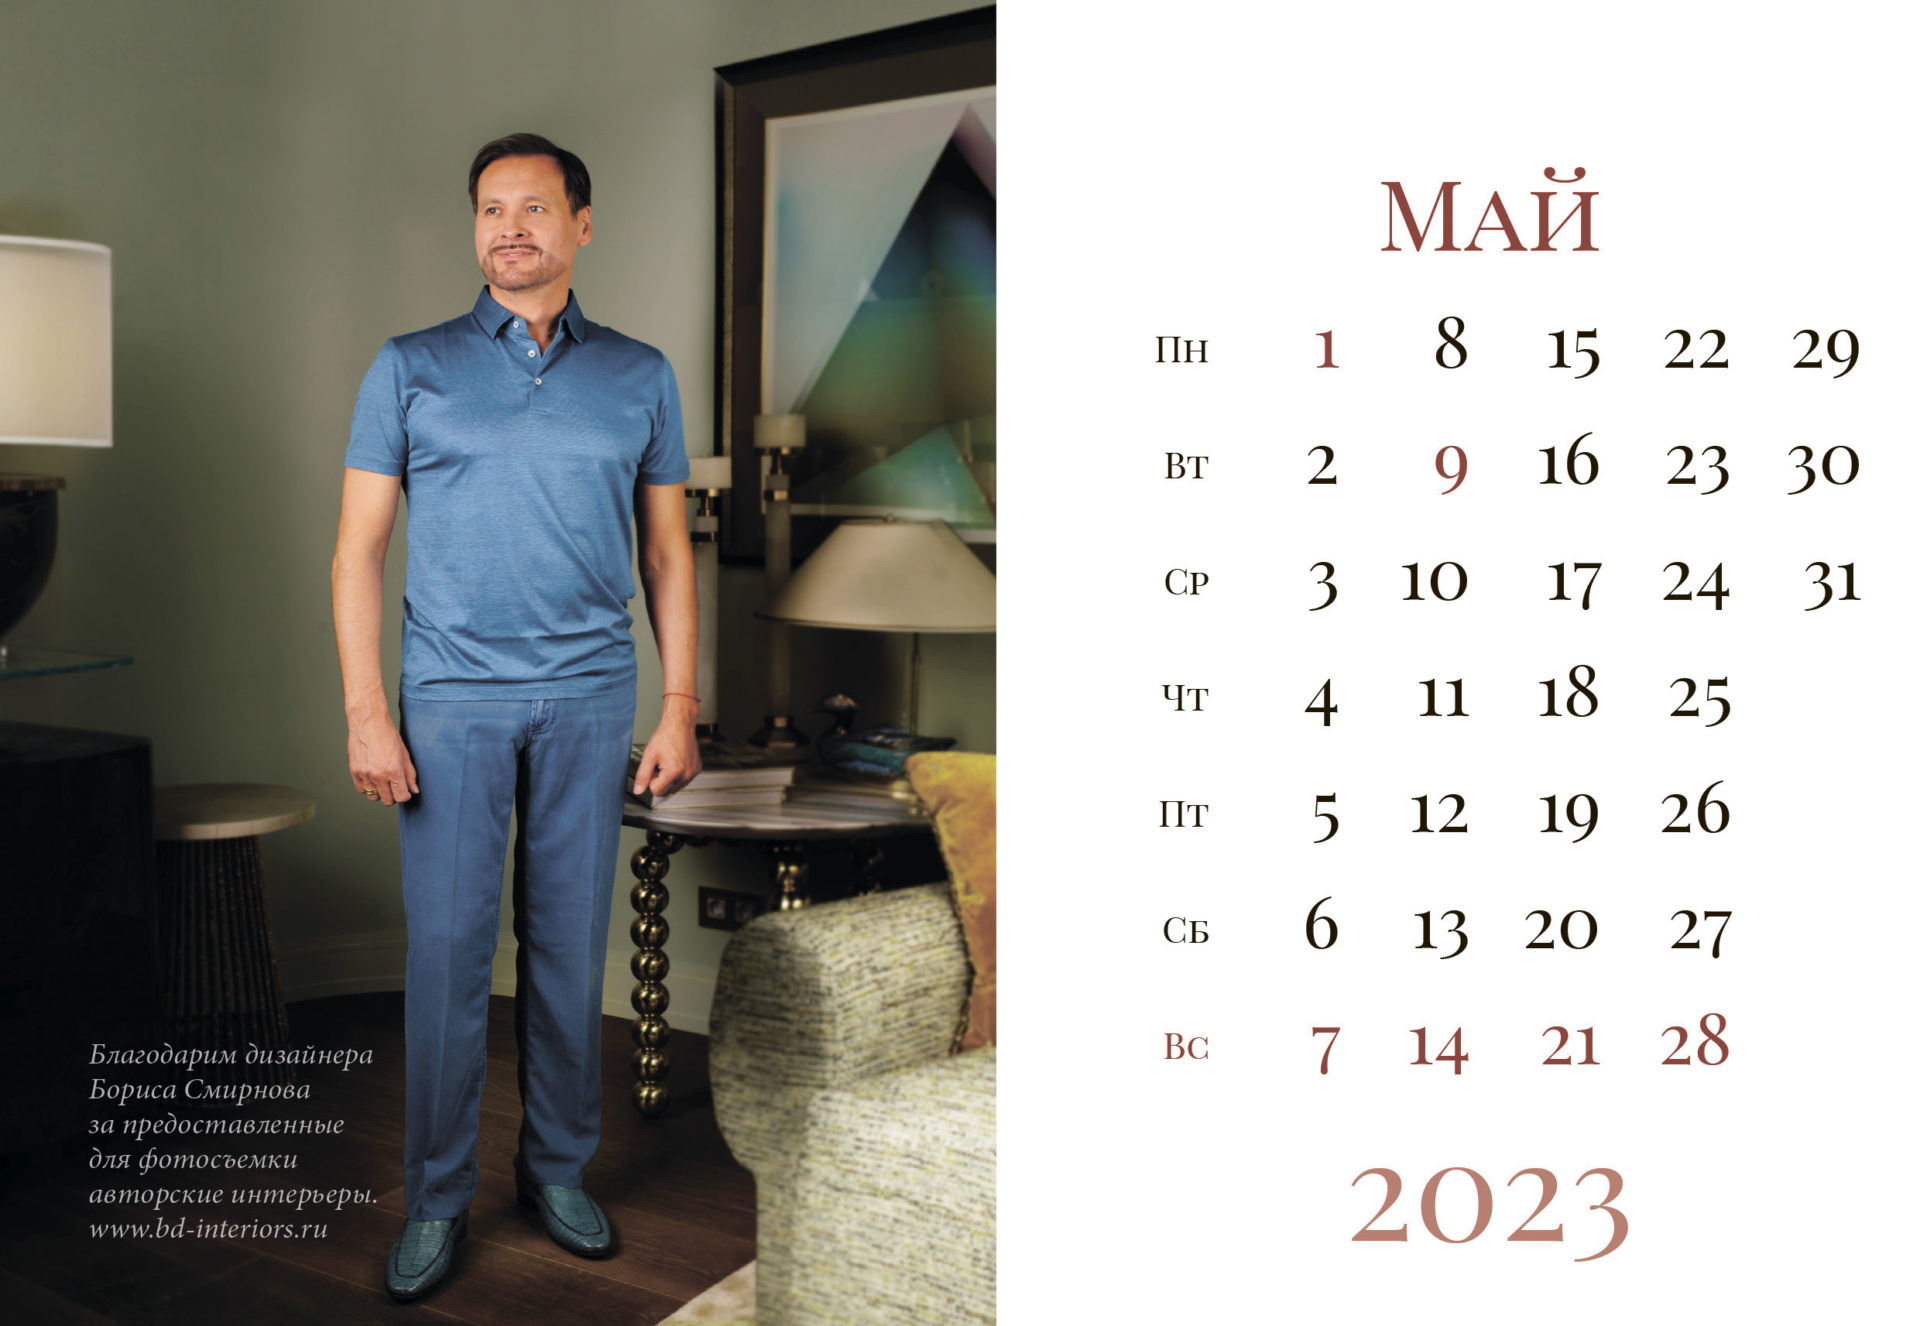 Календарь UNICO-S 2023